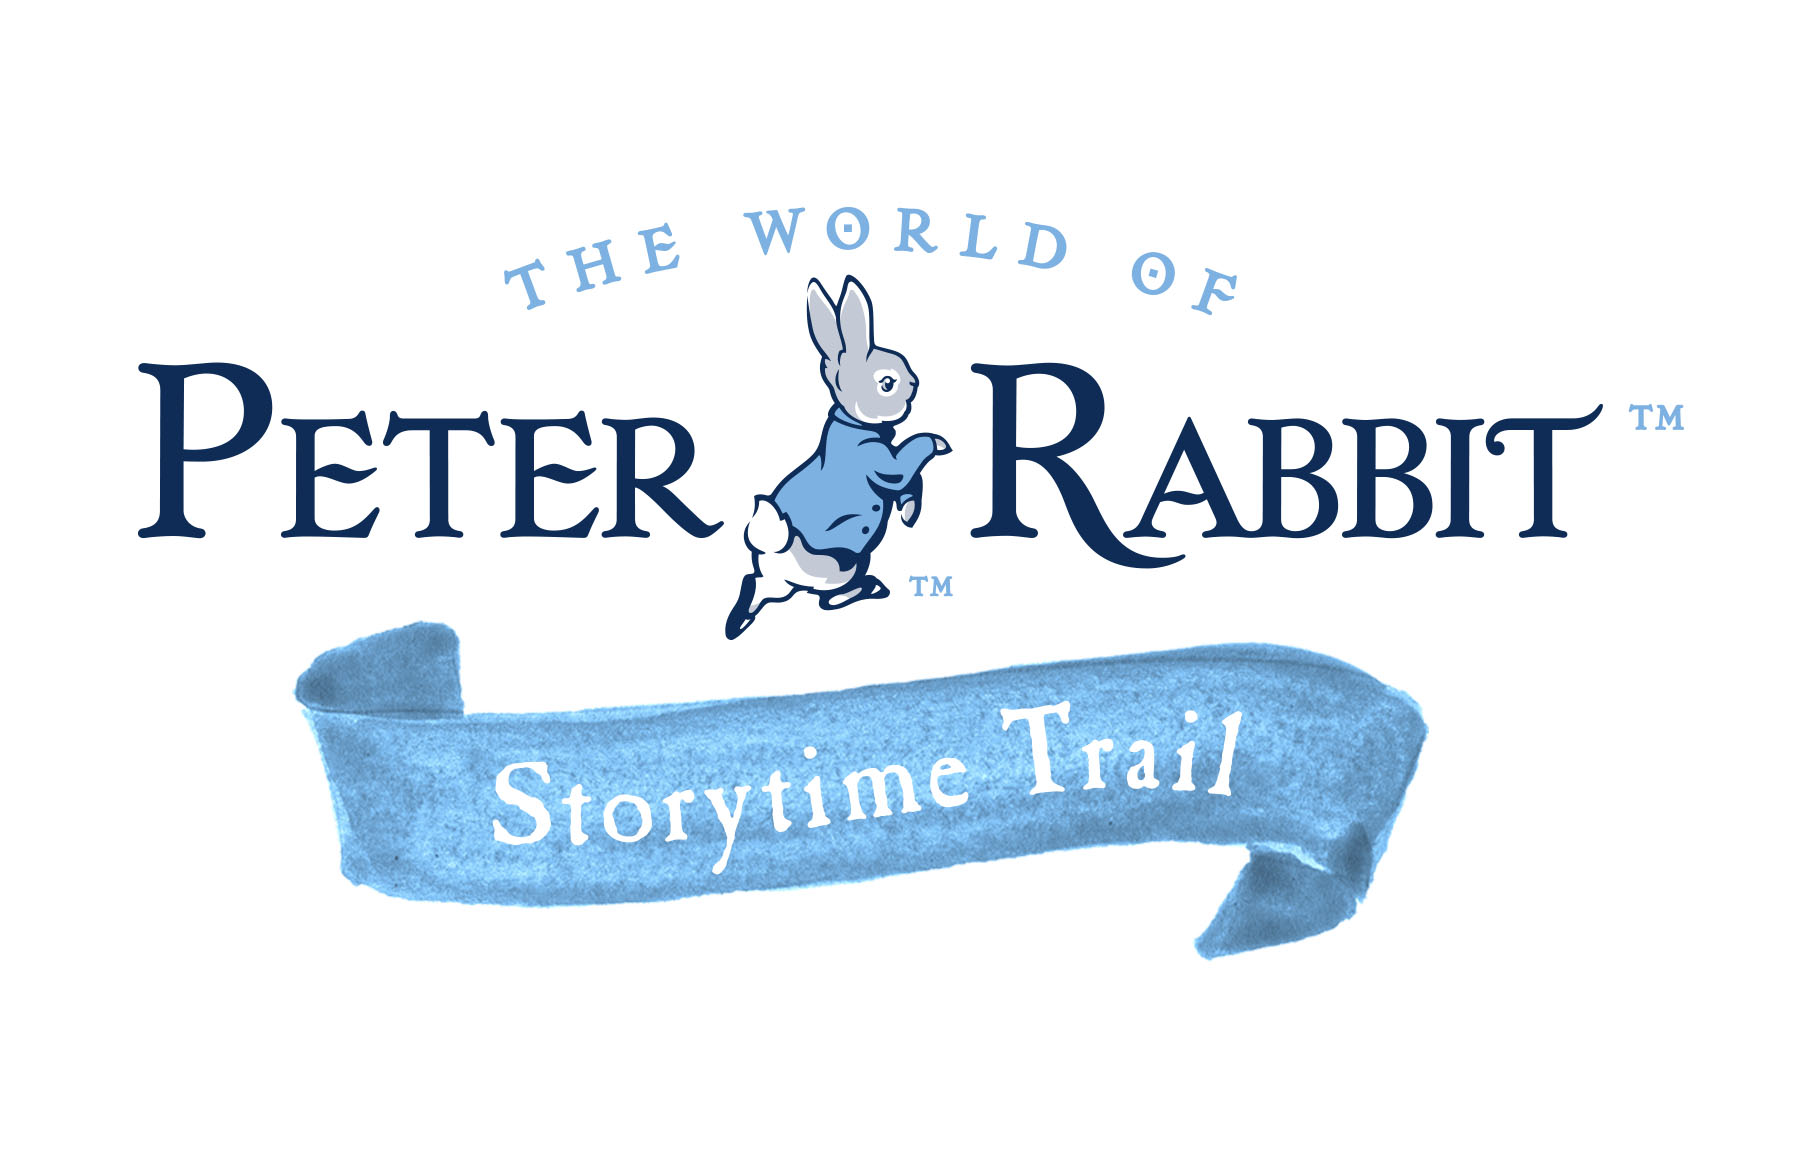 Peter Rabbit Storytime Trail Logo